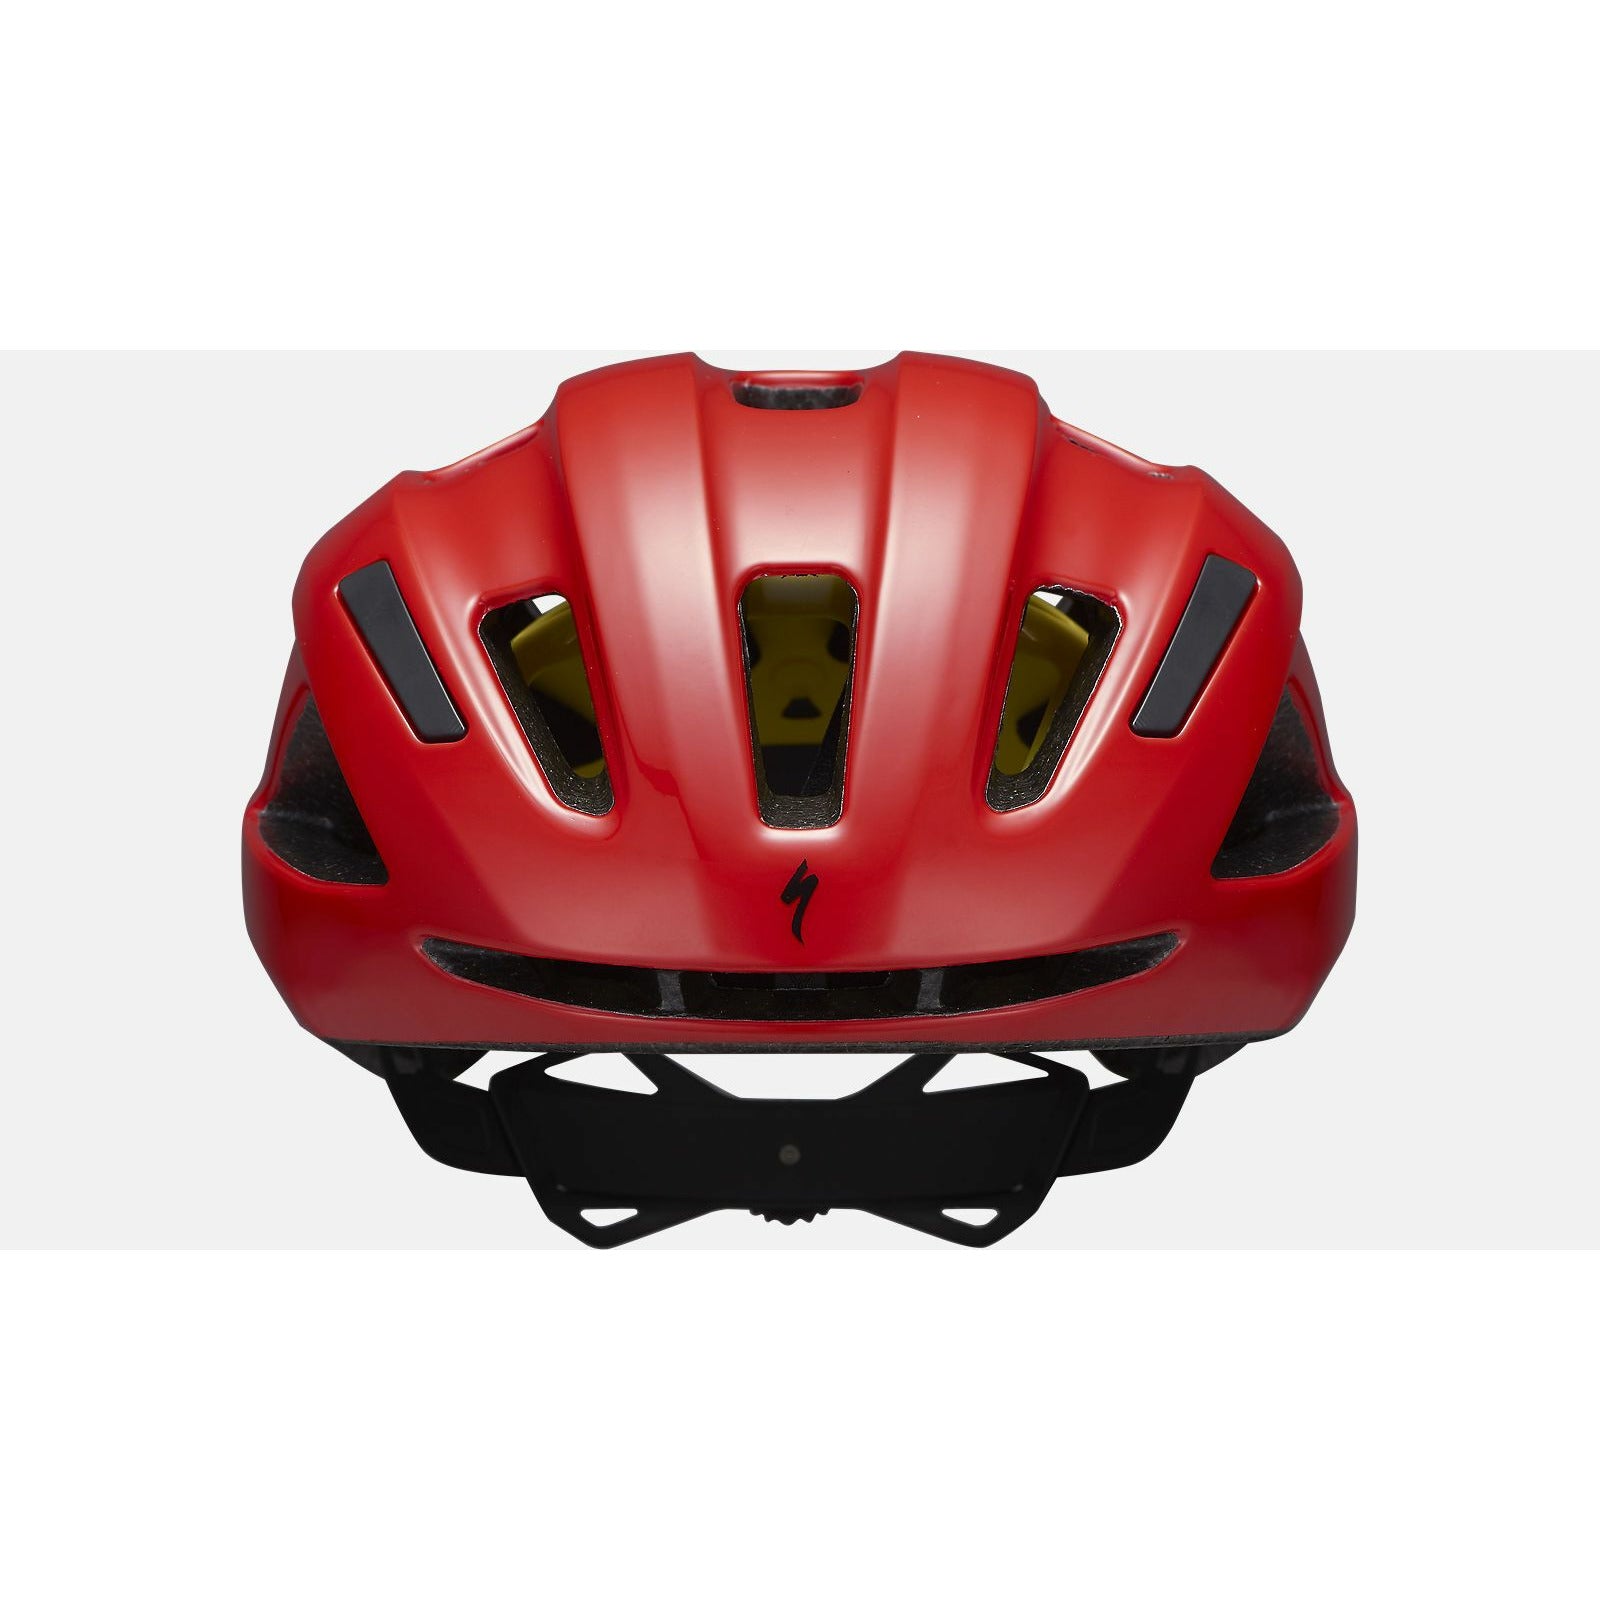 Specialized Align II Recreational MIPS Bike Helmet